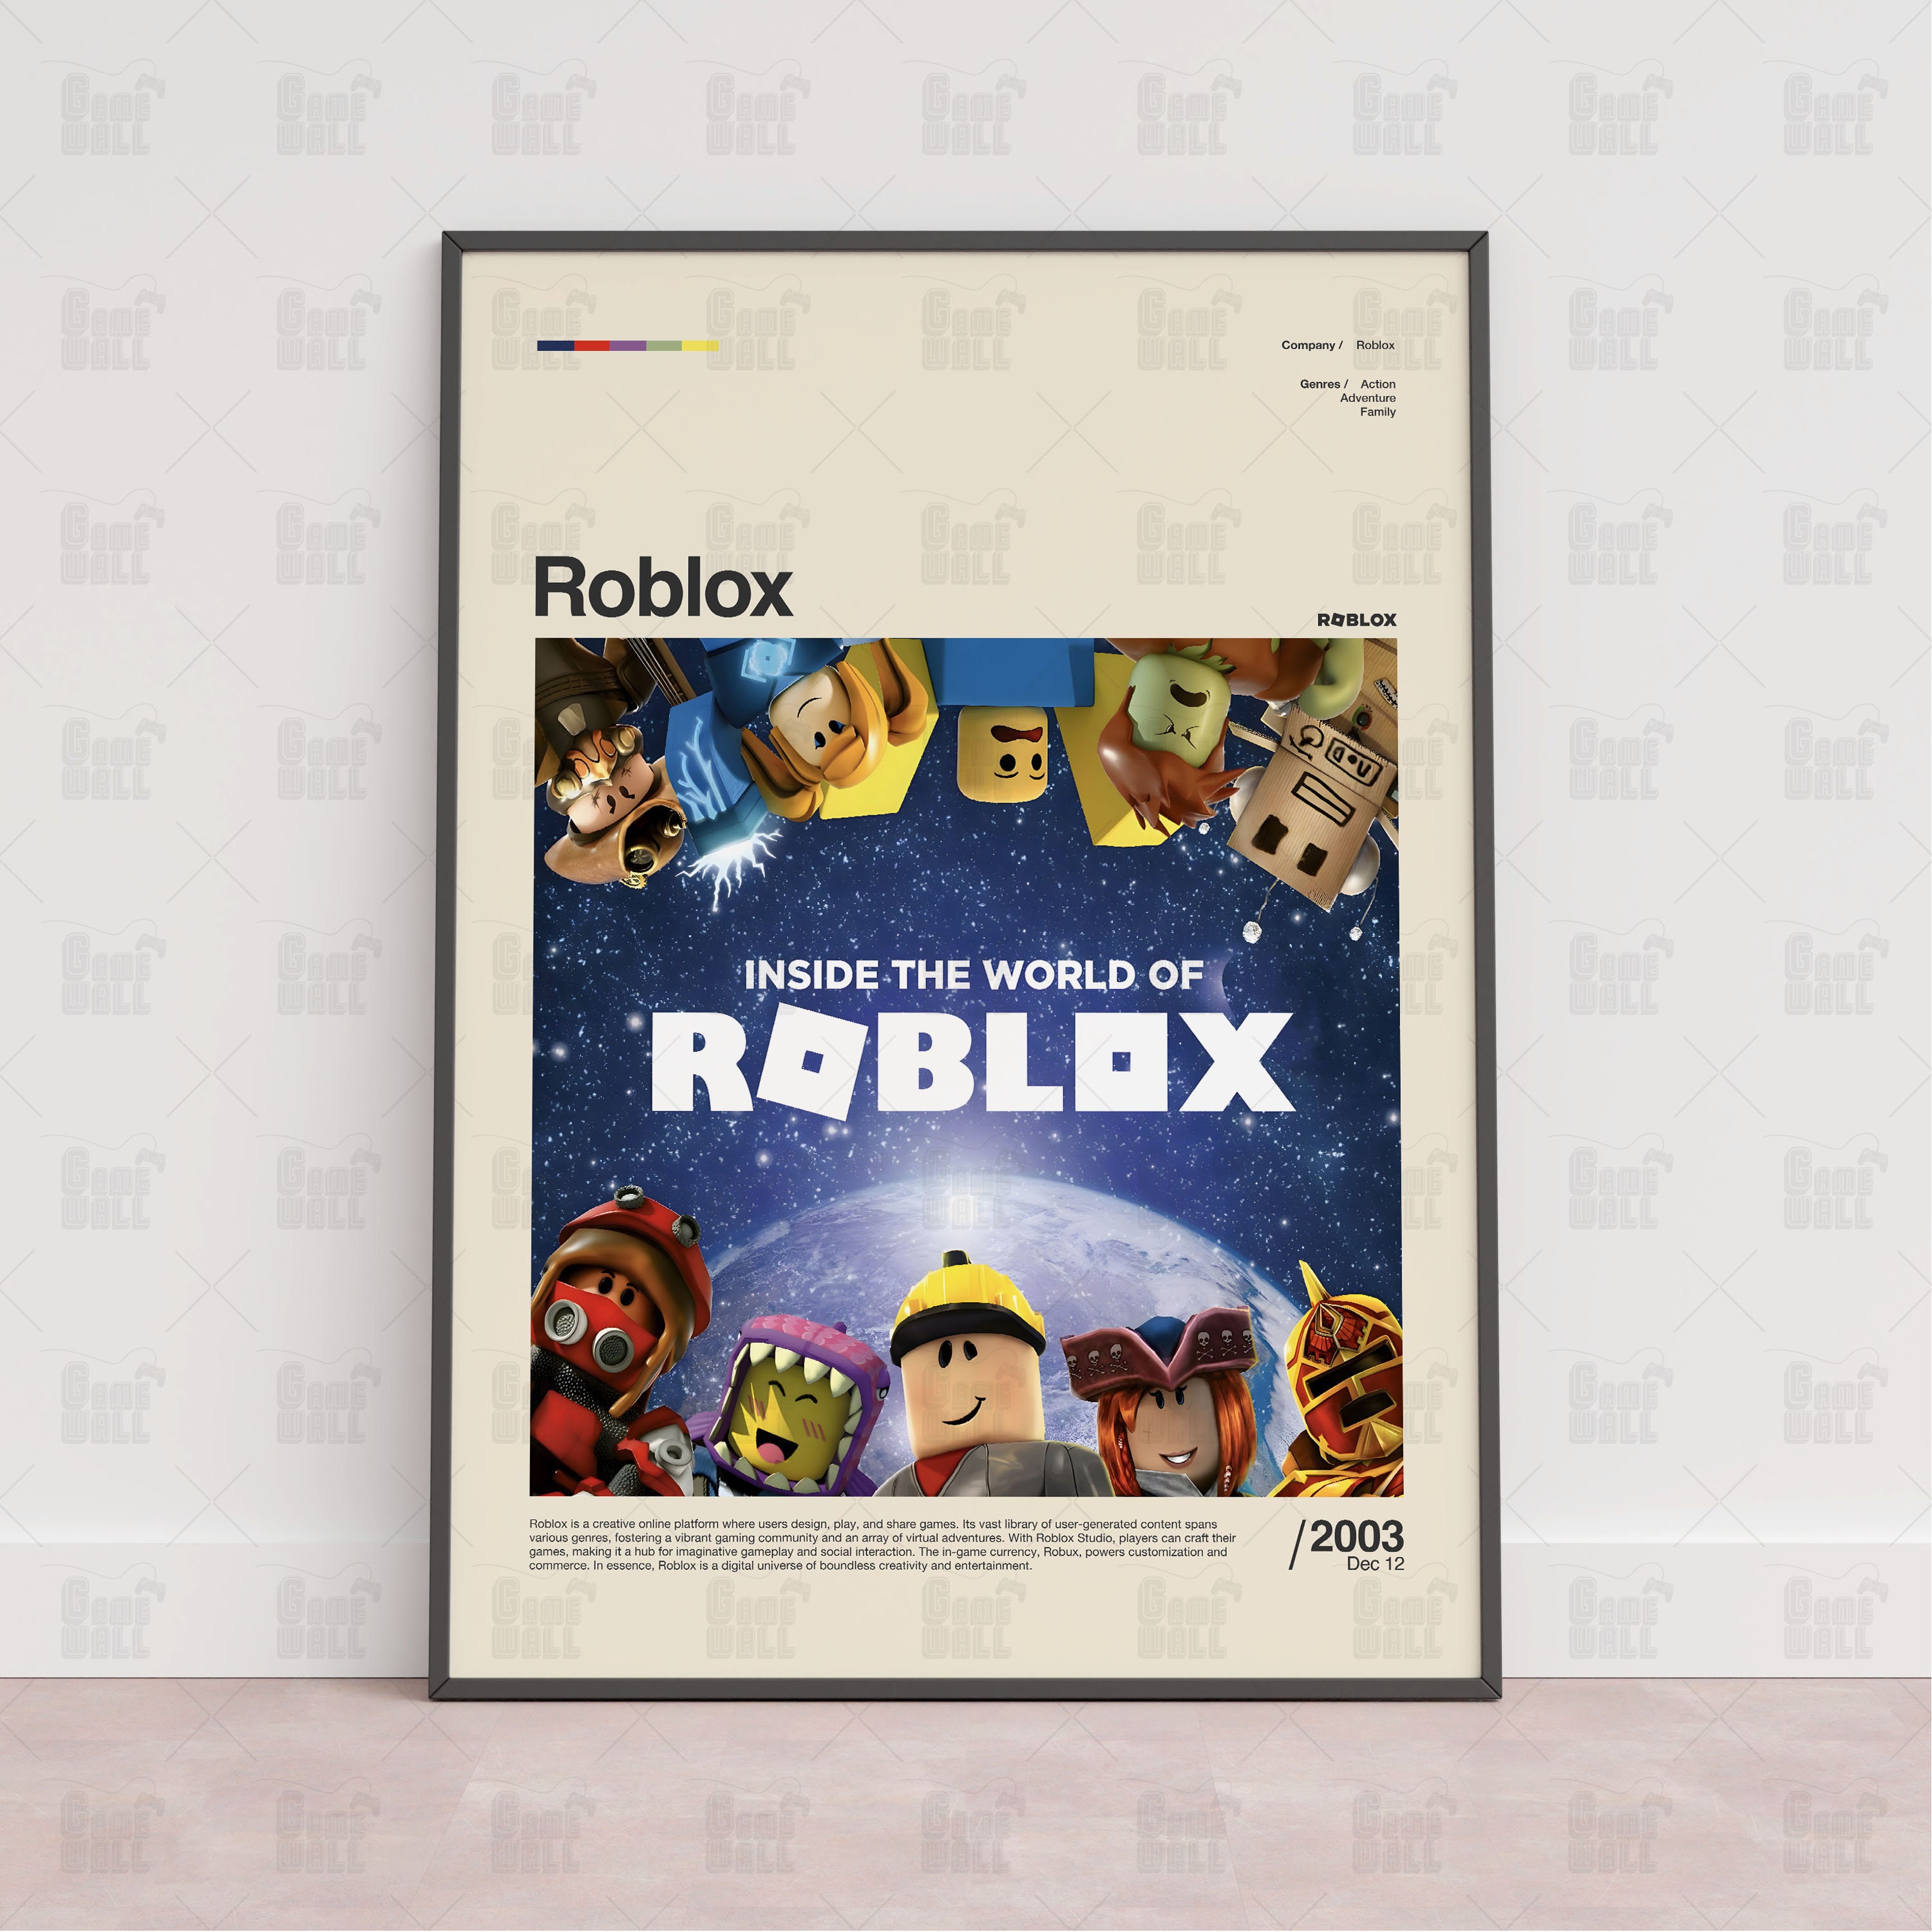 Roblox Gift Card Robux 6.200 Brasil - Código Digital - Playce - Games &  Gift Cards 